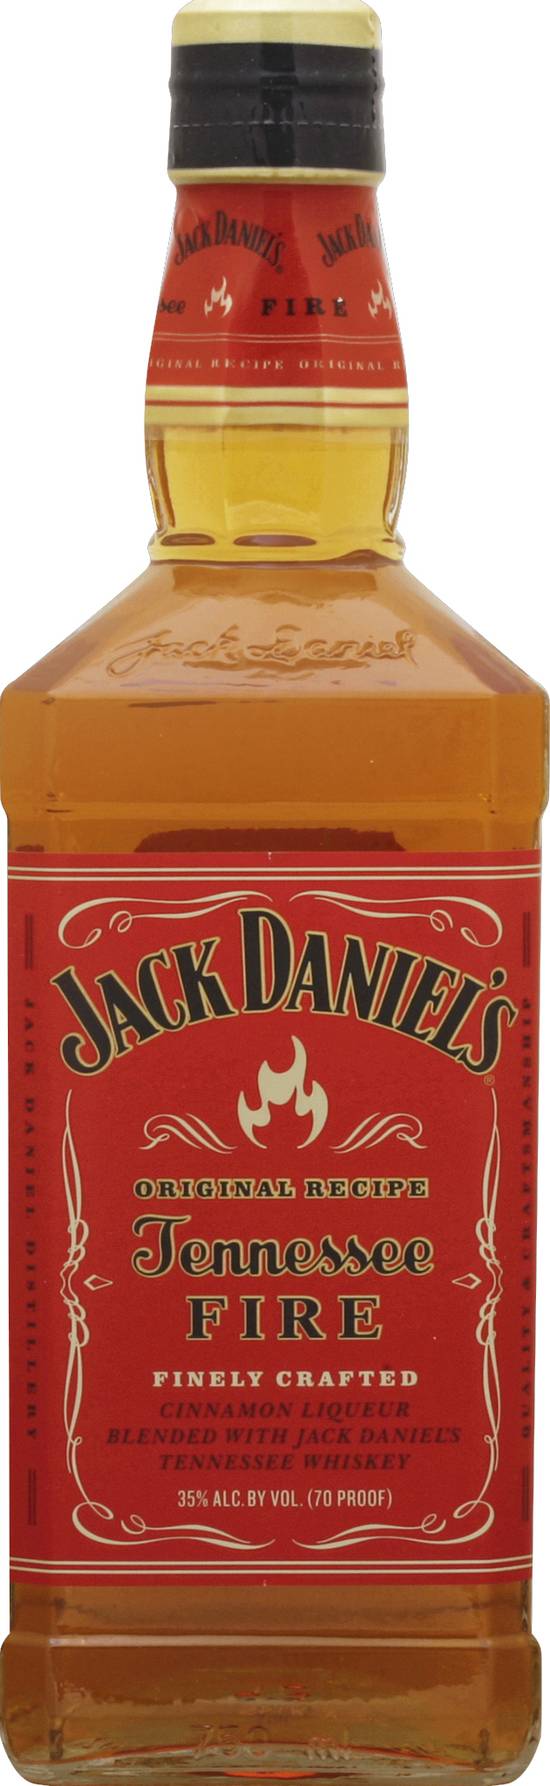 Jack Daniel's Original Recipe Tennessee Whiskey (750 ml) (cinnamon)